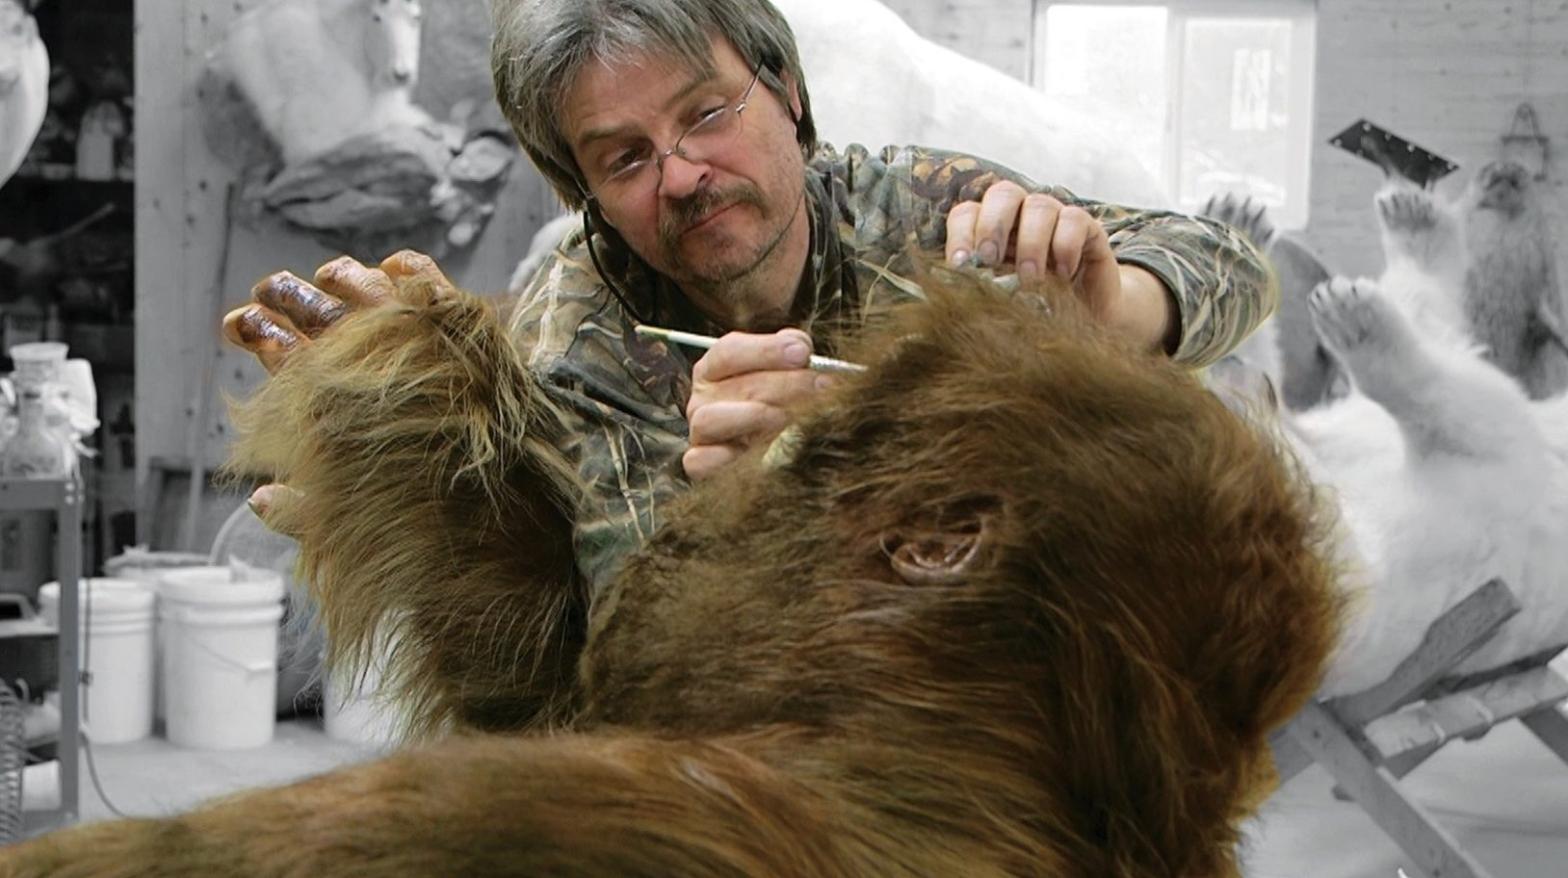 Ken Walker tends to his creation in Big Fur. (Photo: 1091 Media)